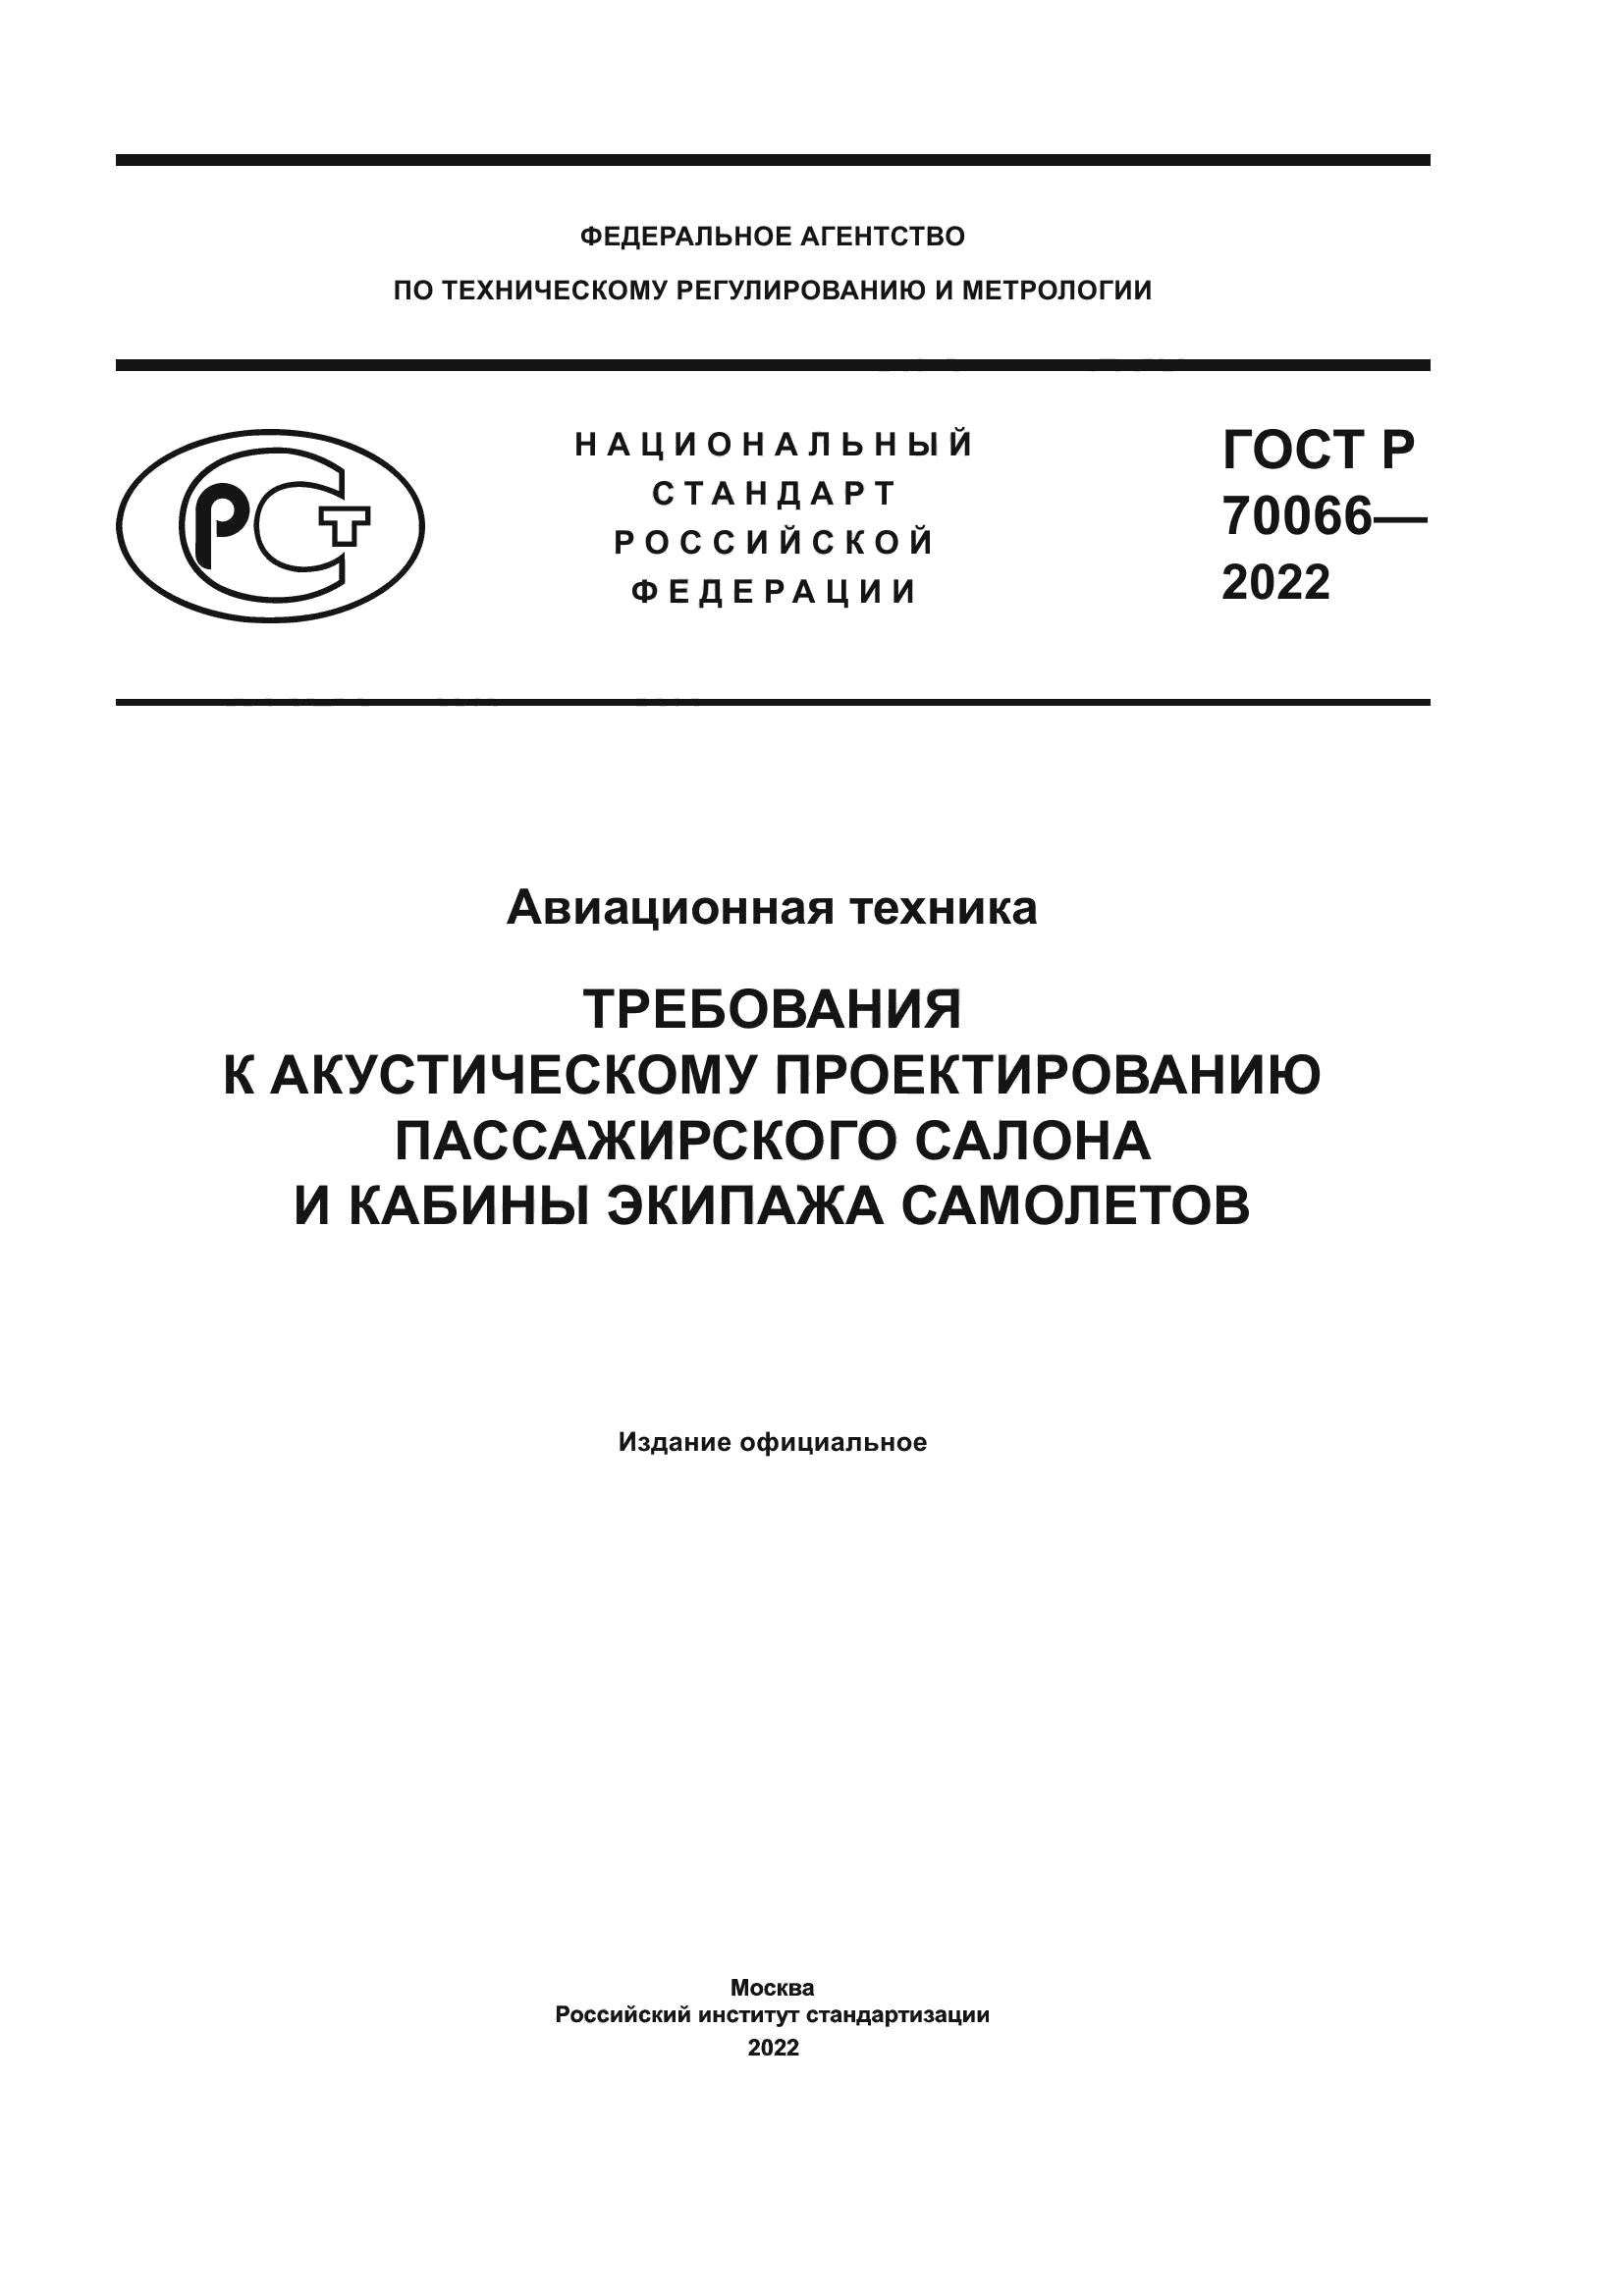 ГОСТ Р 70066-2022